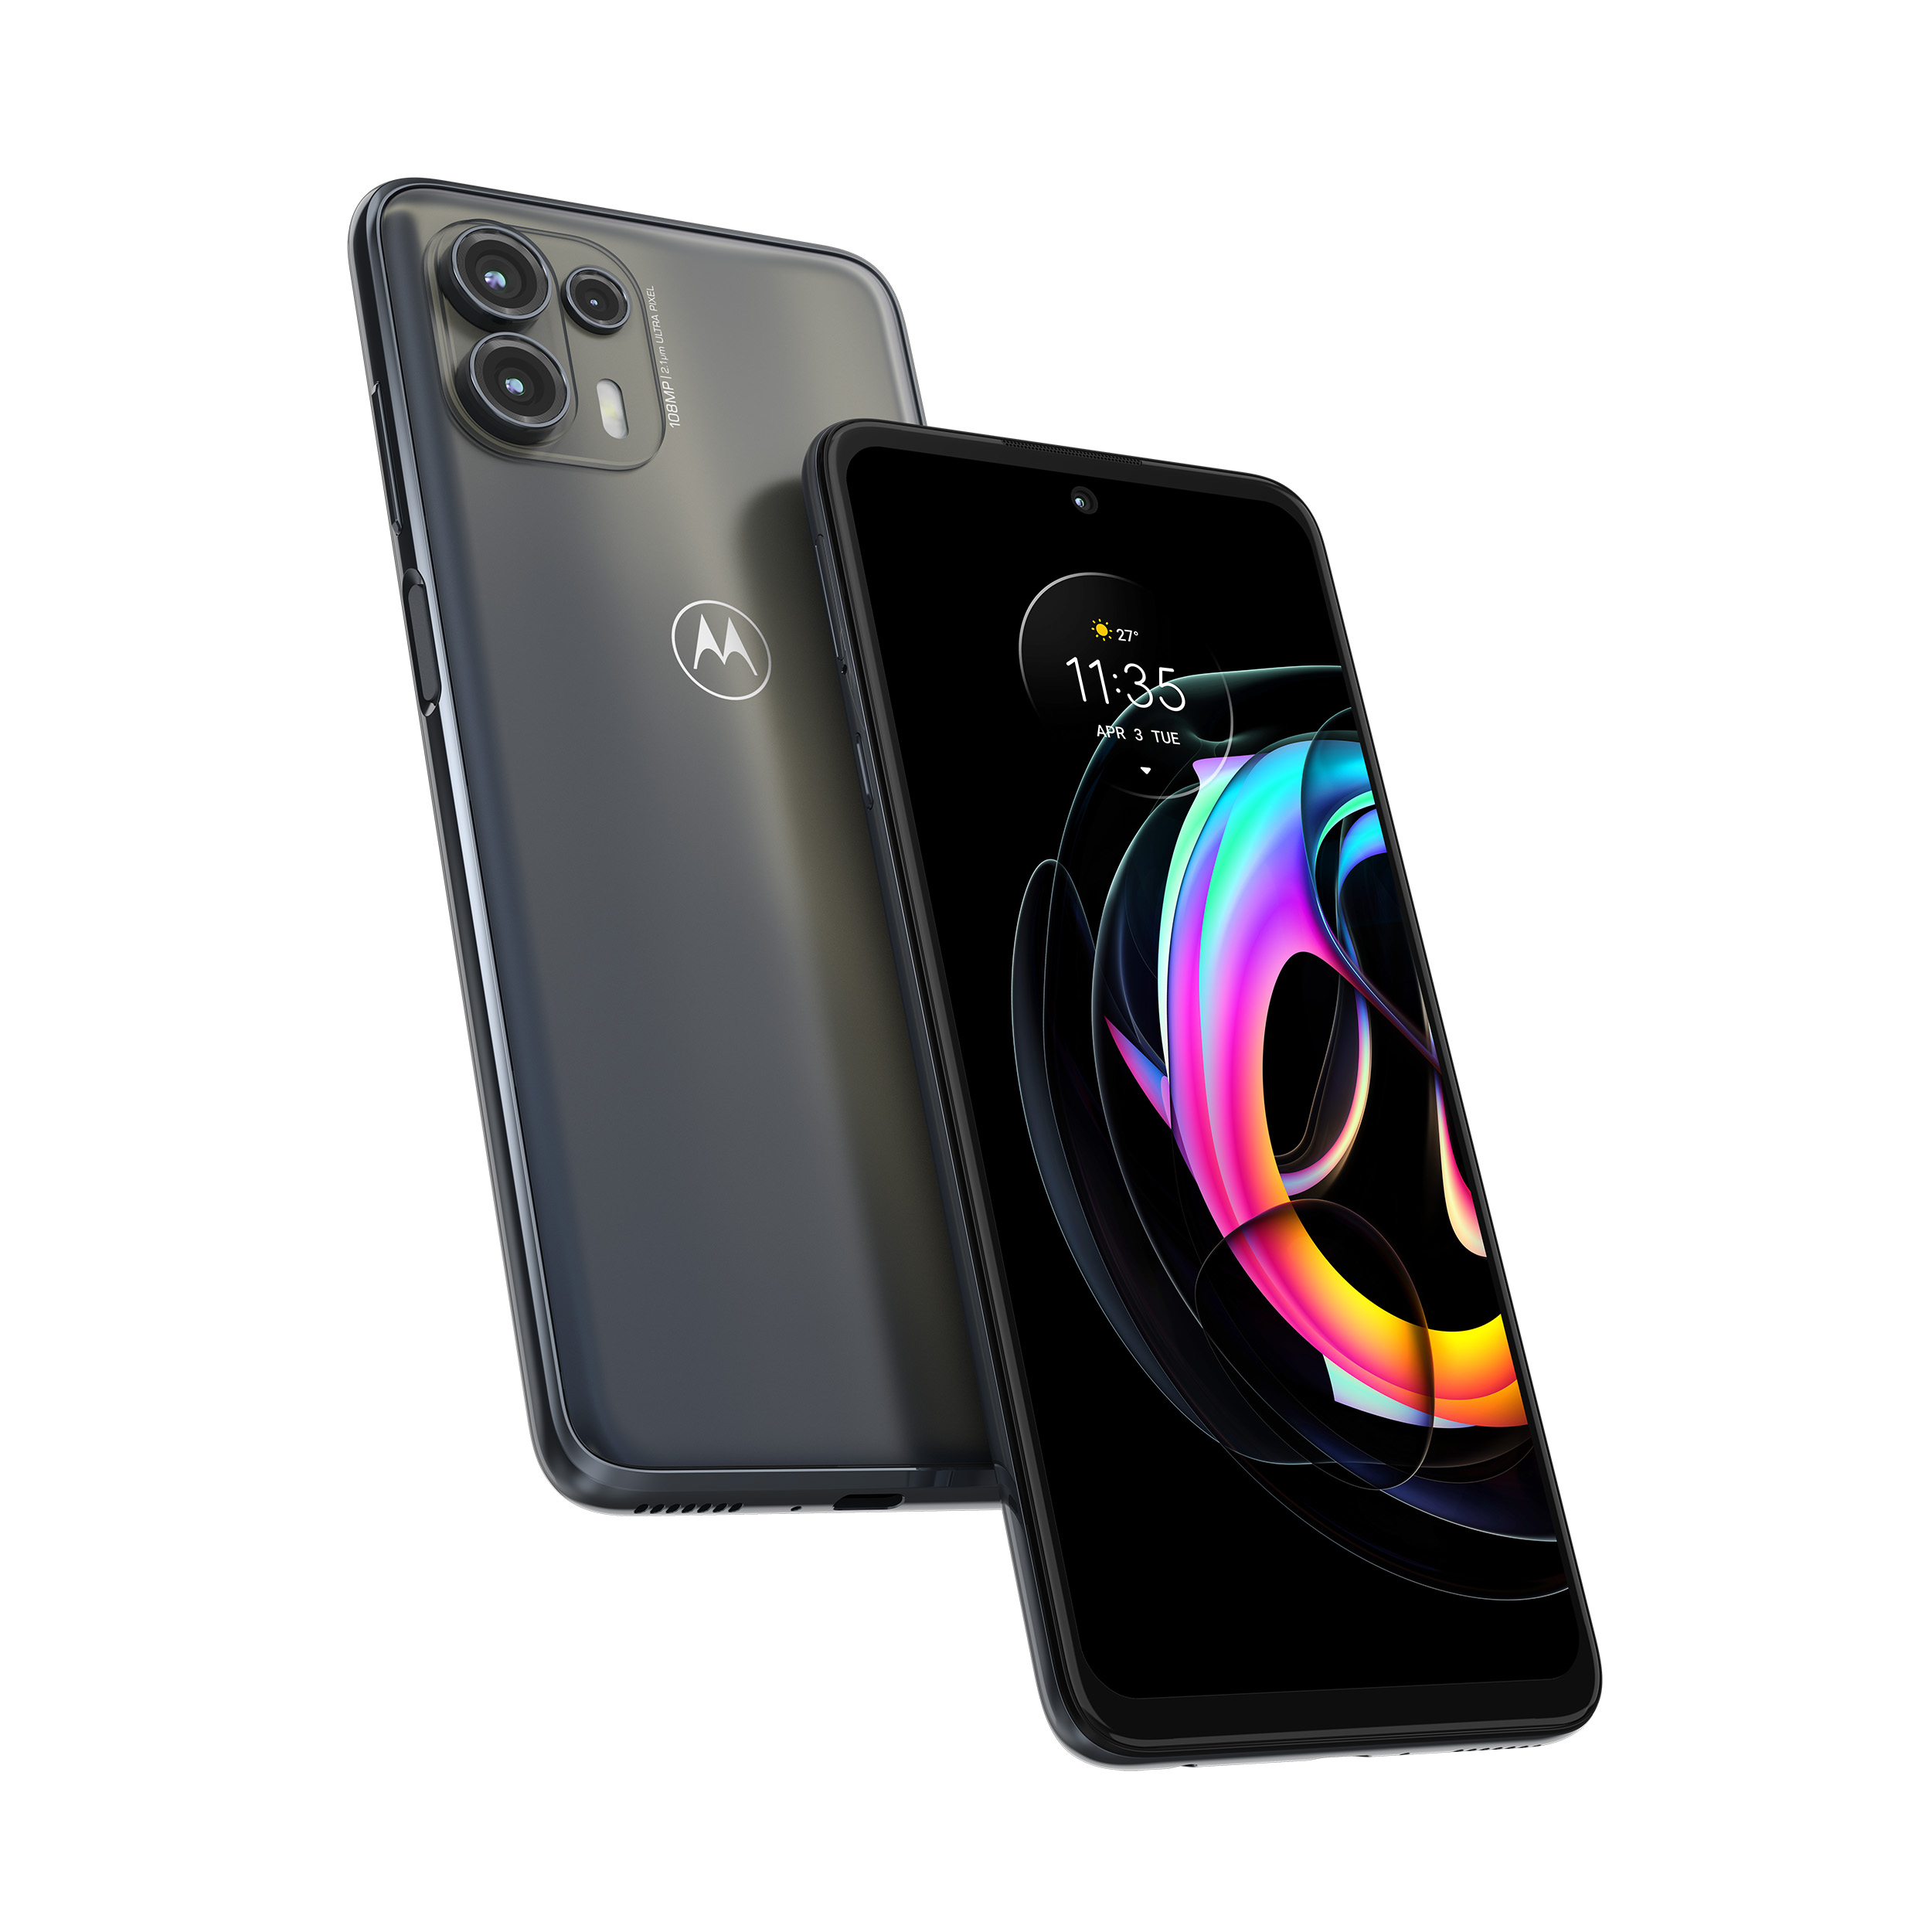 Motorola Edge 20 series brings a trio of Android phones 9to5Google